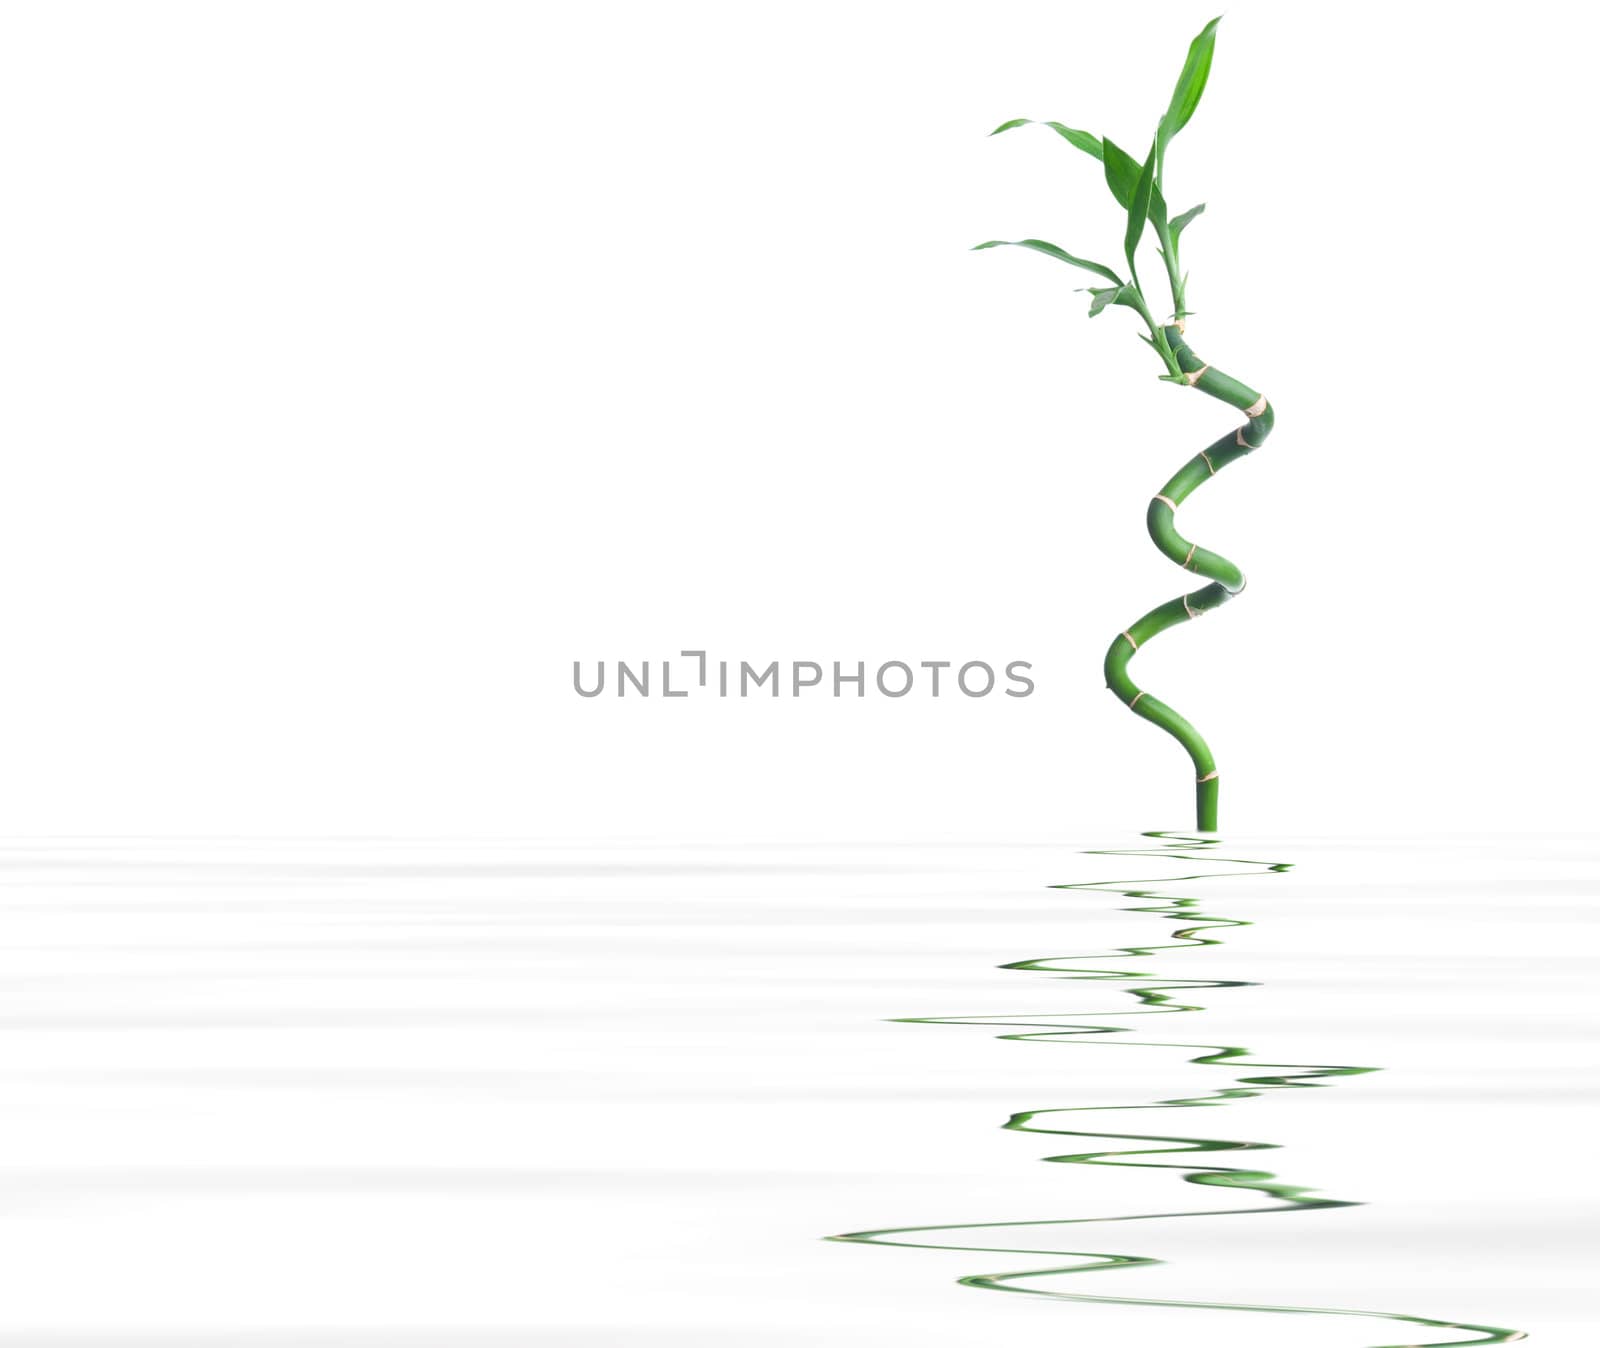 Bamboo by Vladimir